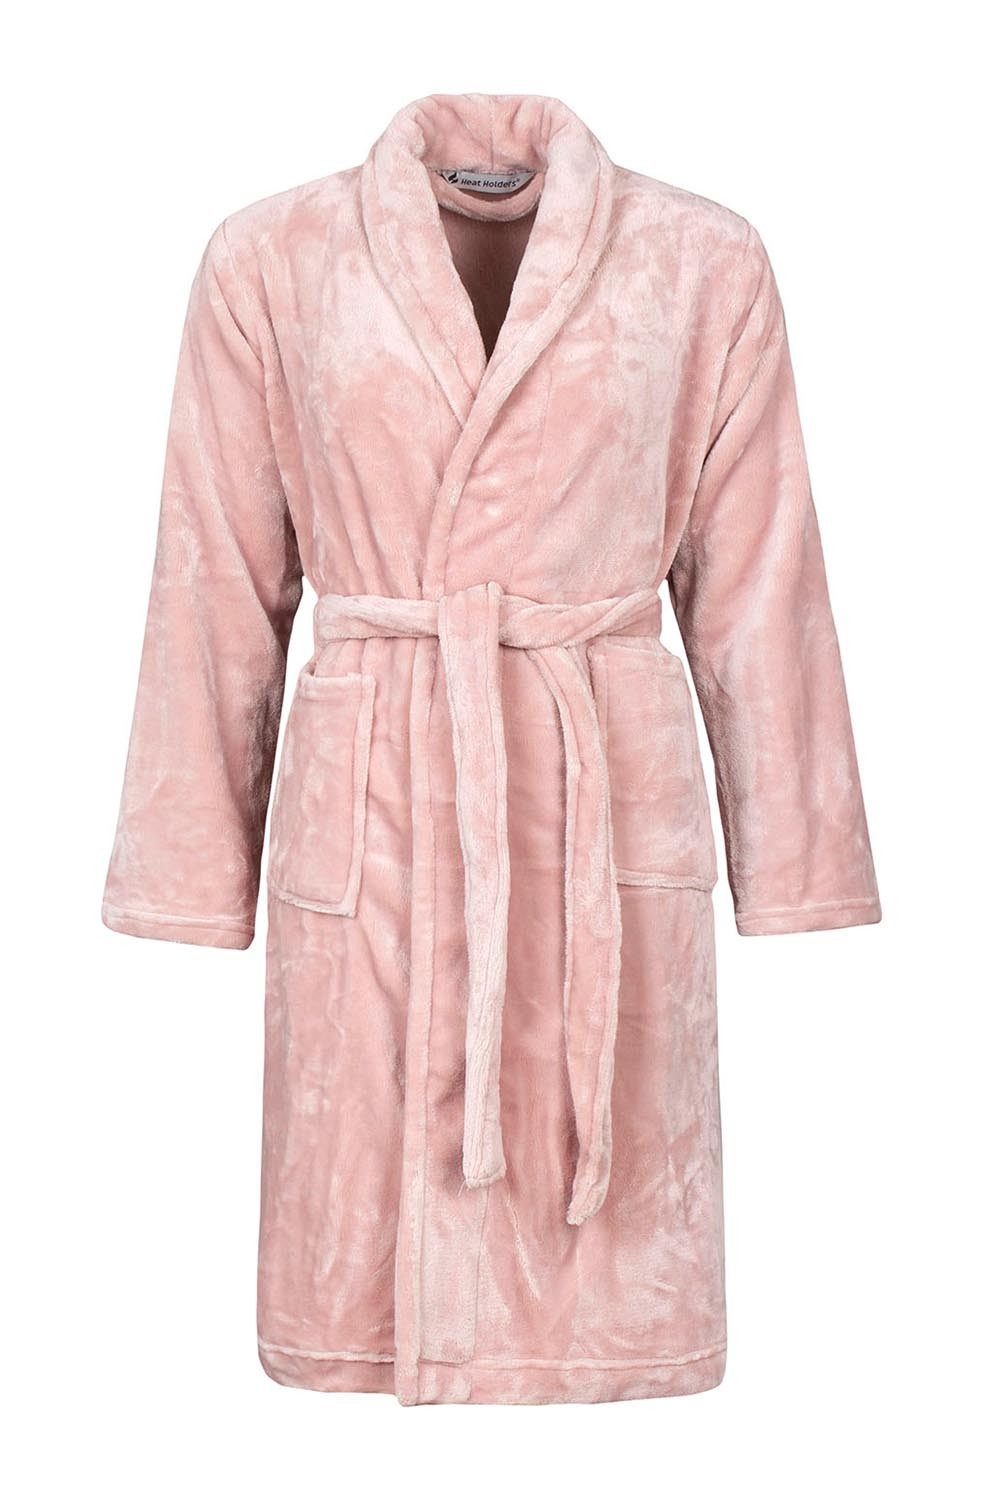 Luxury Bathrobes :: Plush Robes :: Black Plush Soft Warm Fleece Womens Robe  - Wholesale bathrobes, Spa robes, Kids robes, Cotton robes, Spa Slippers,  Wholesale Towels